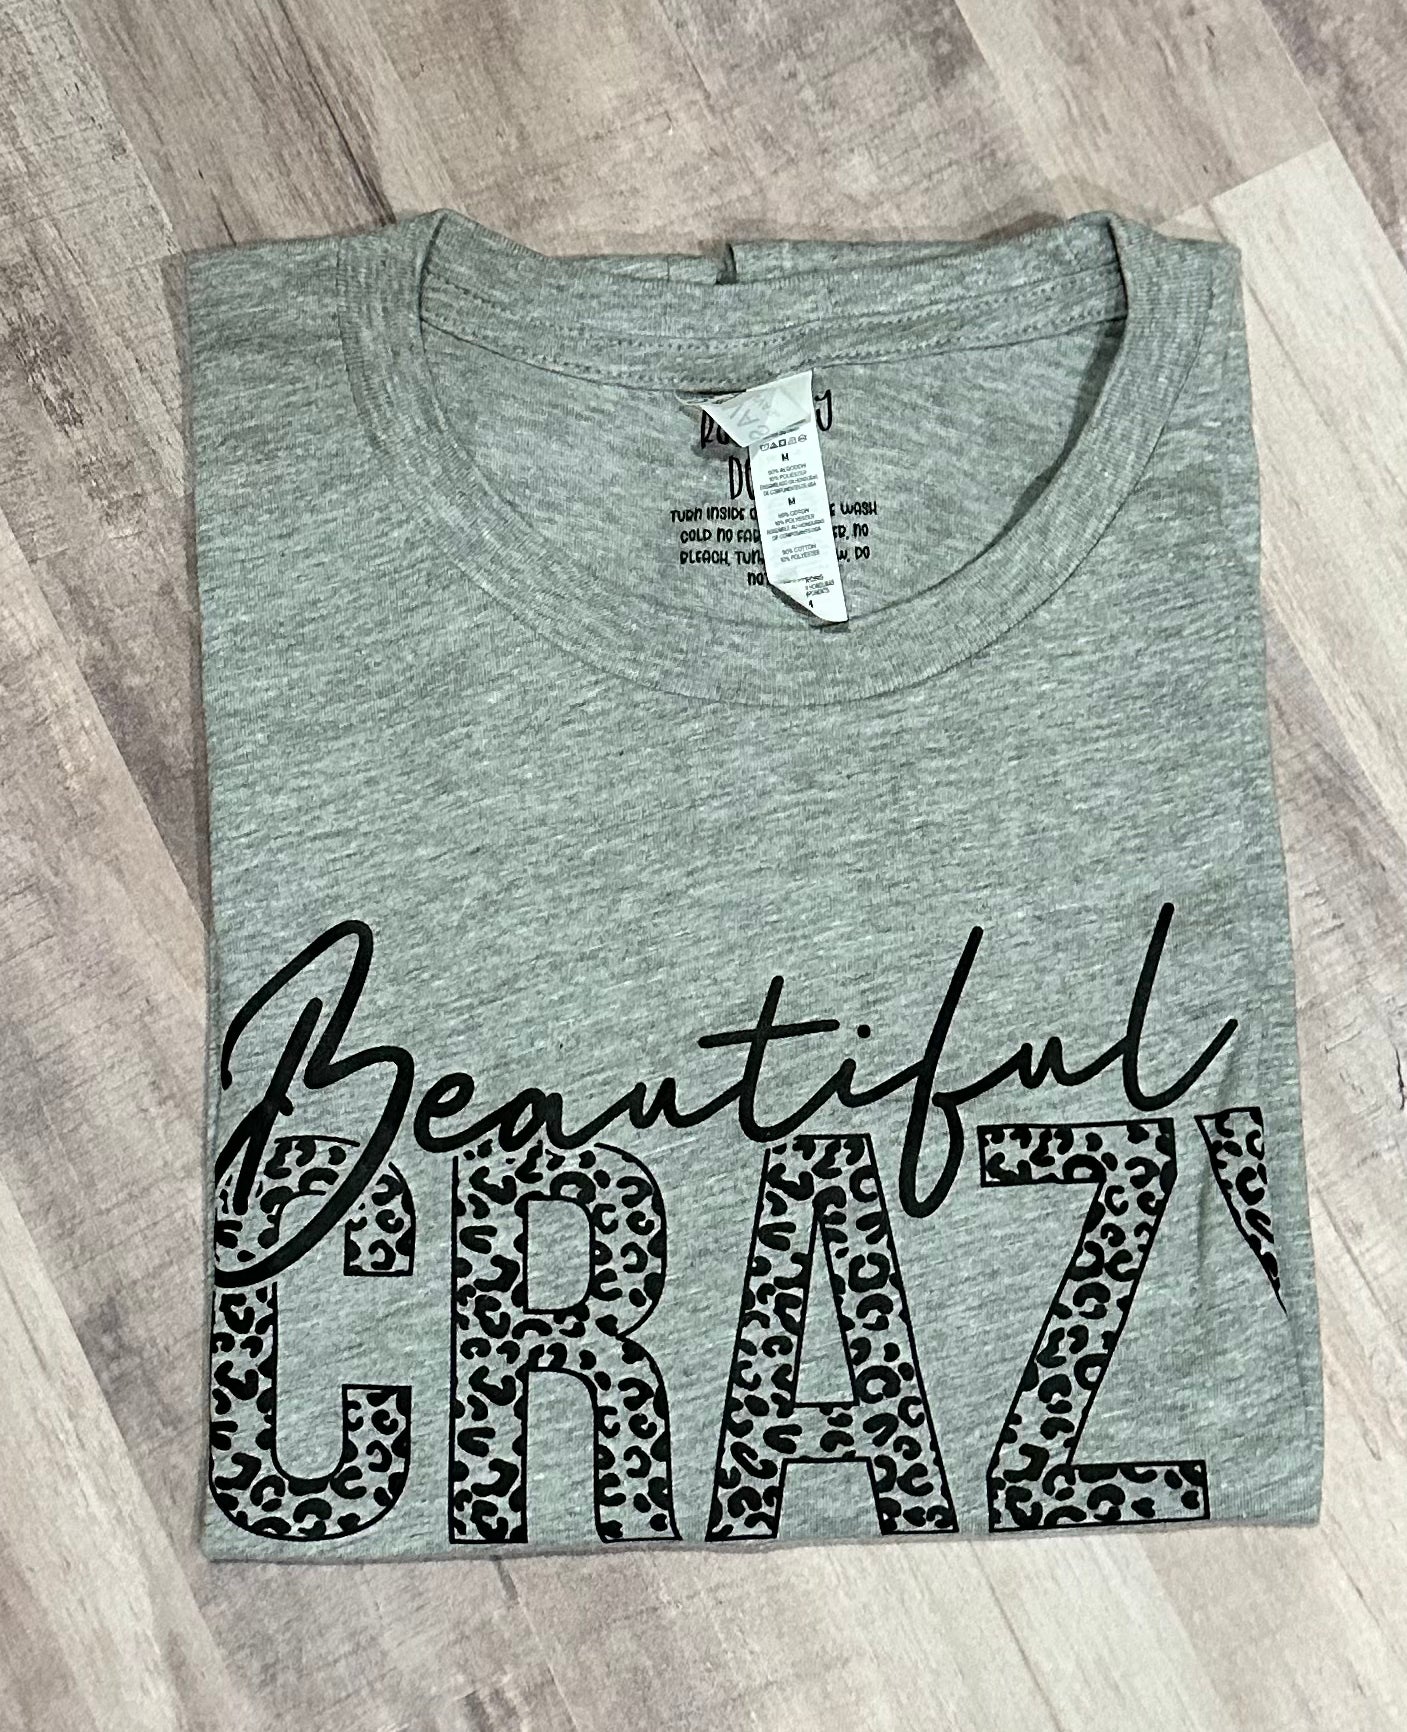 Beautiful Crazy T-Shirt